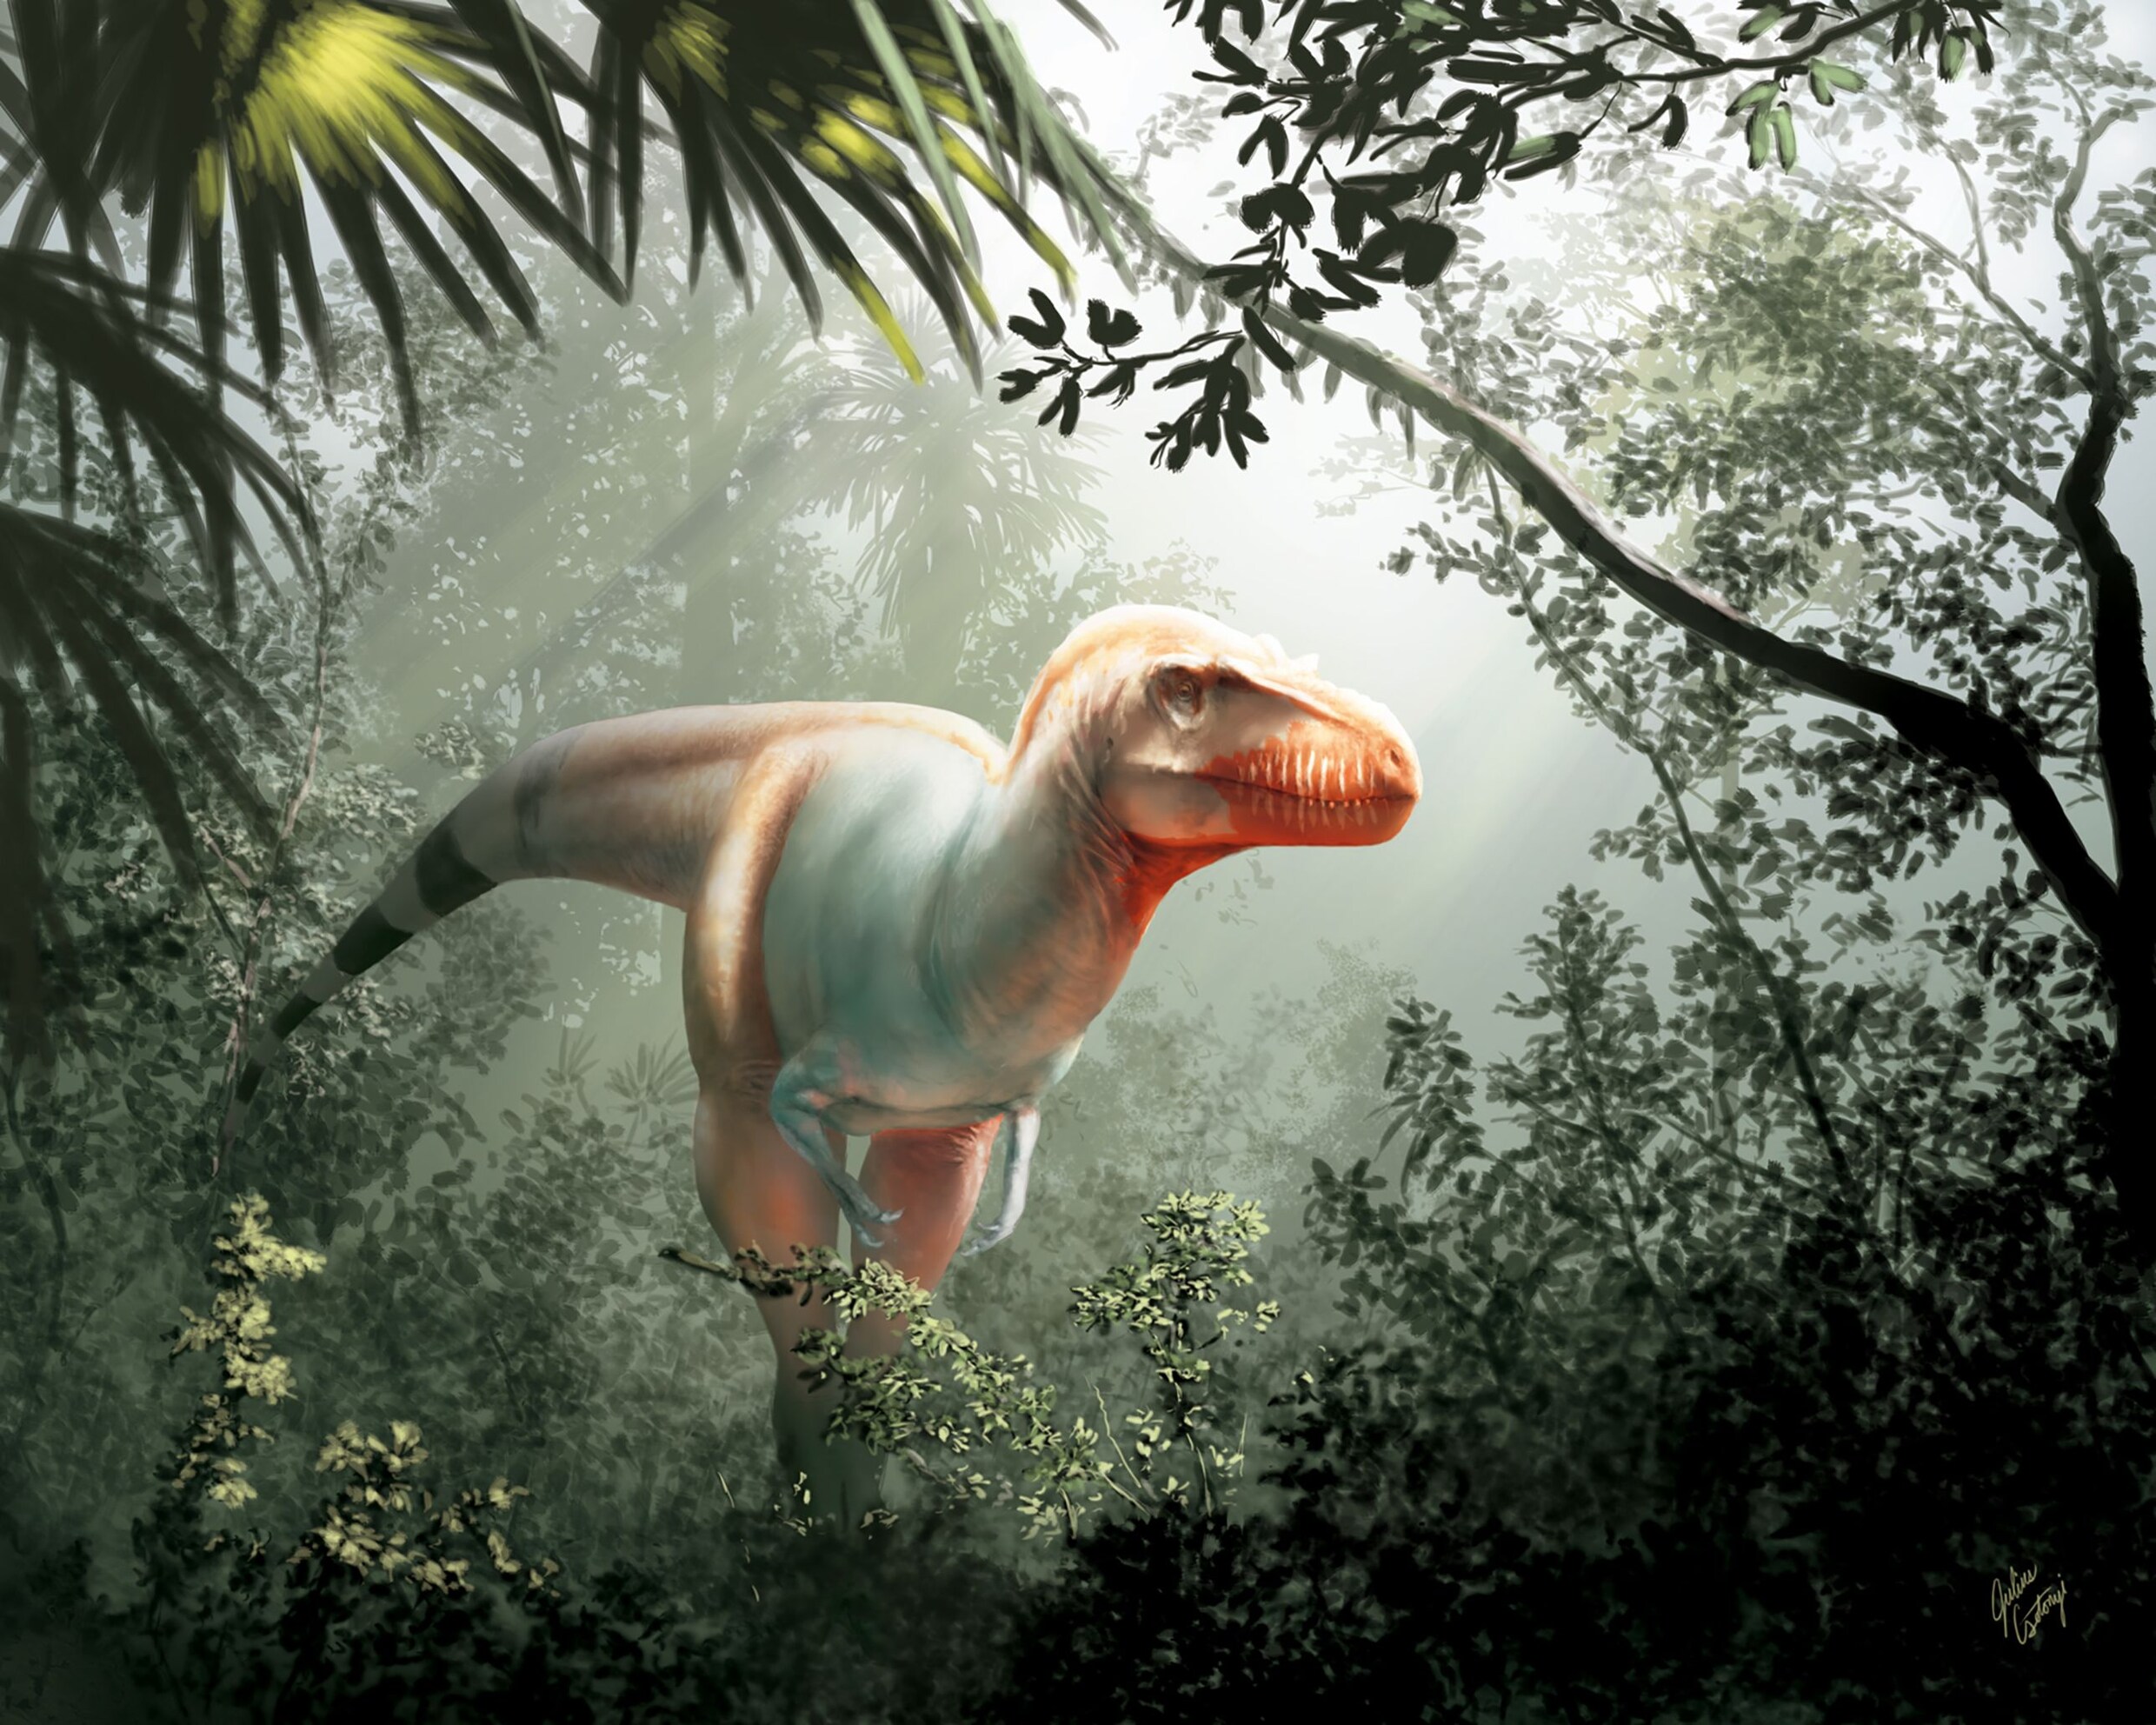 Nieuwe soort tyrannosaurus ontdekt die ‘dood en verderf’ zaaide